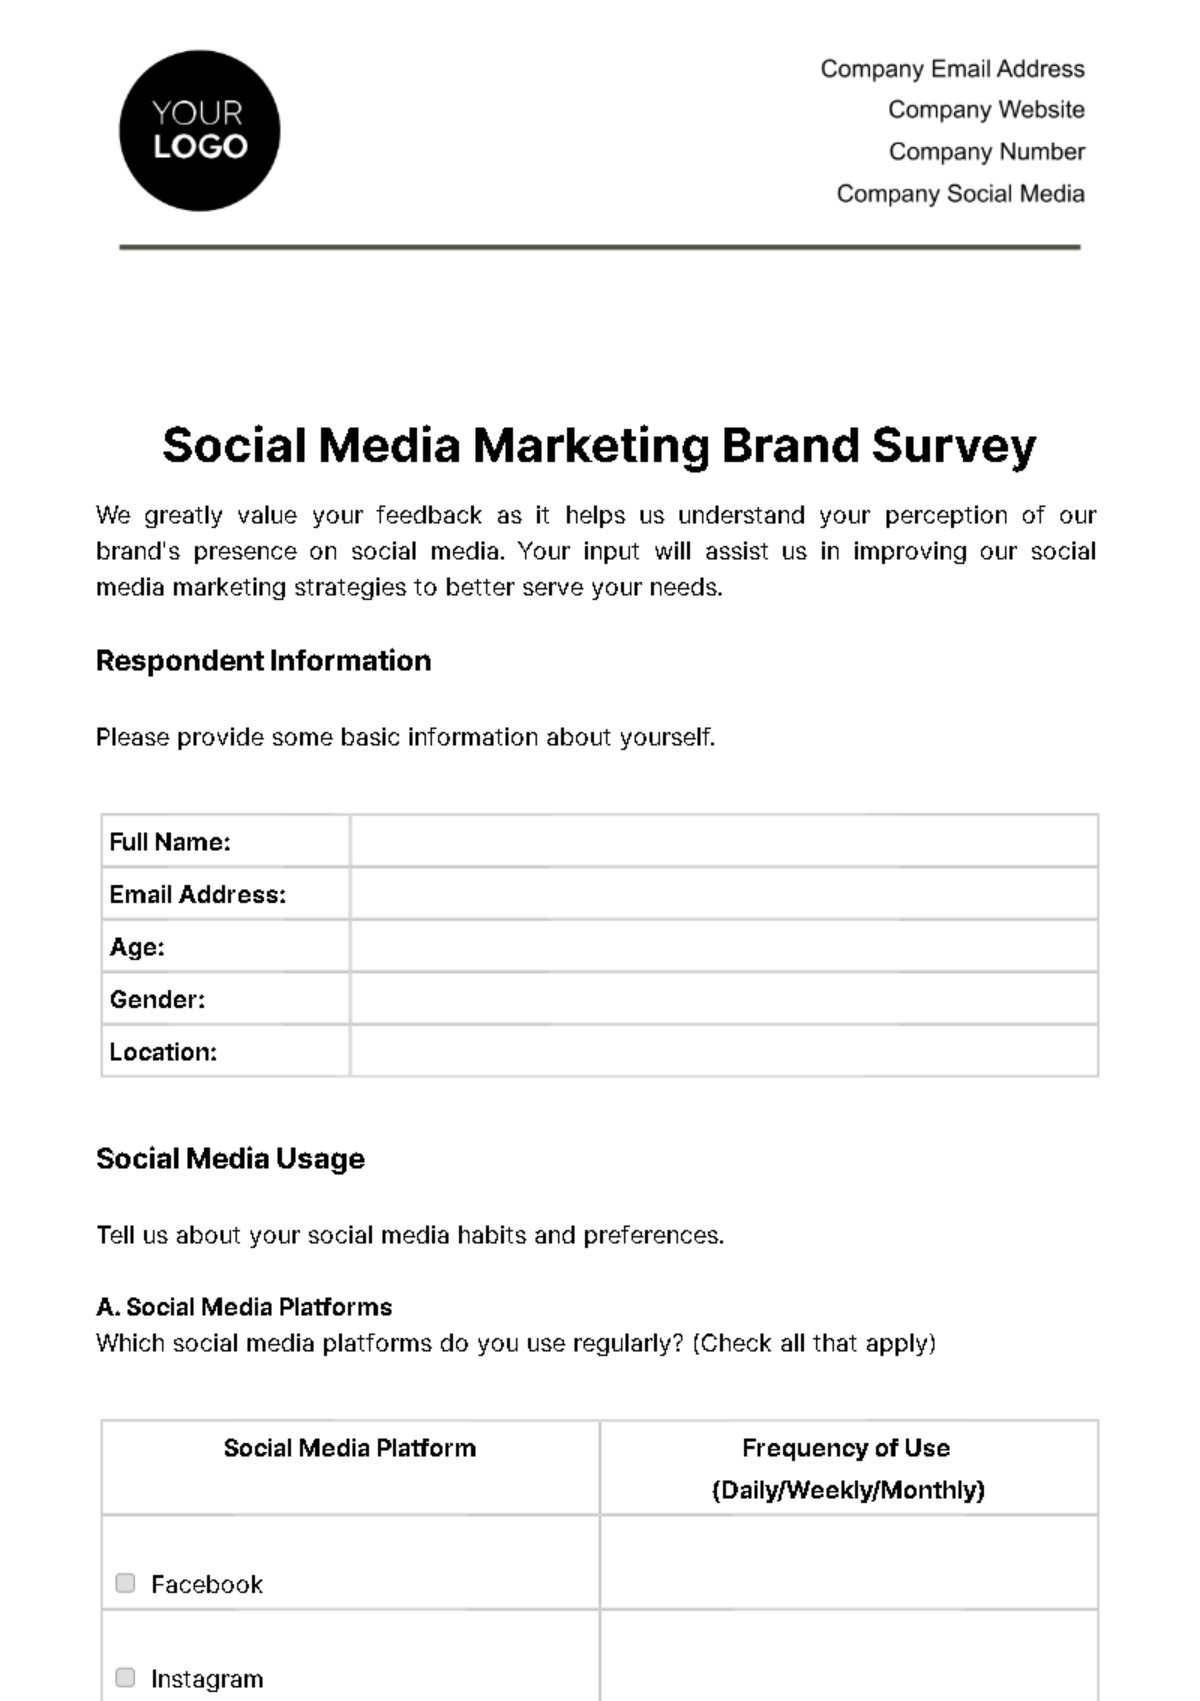 Social Media Marketing Brand Survey Template